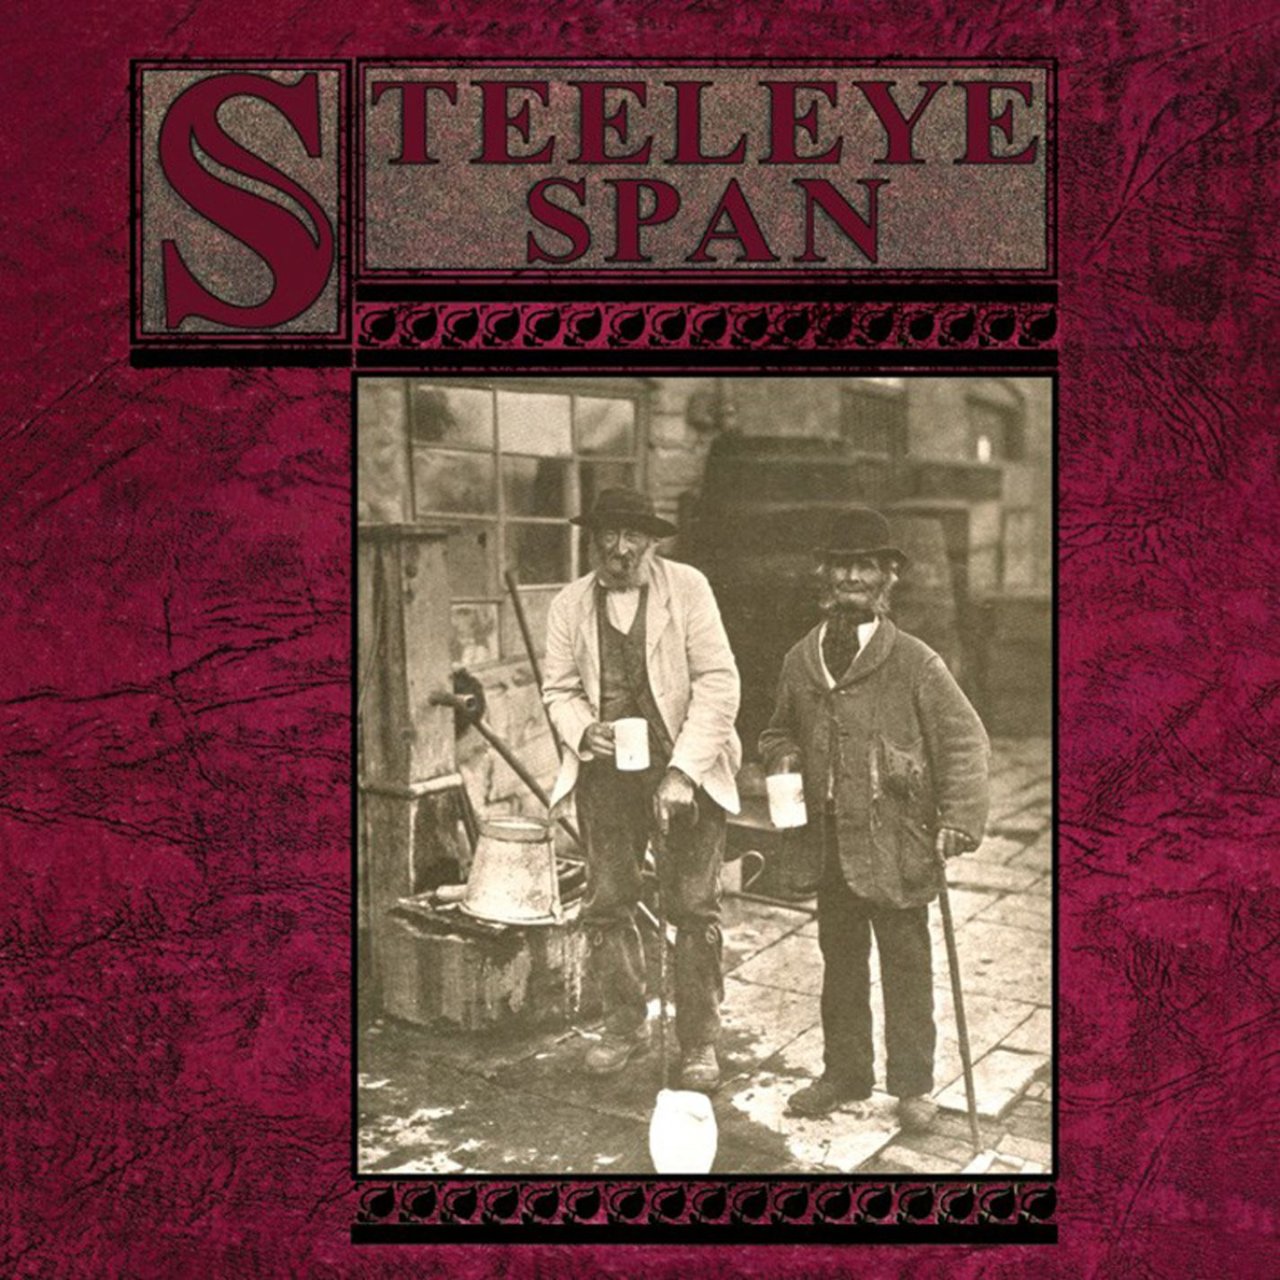 Steeleye Span - Ten Man Mop or Mr Reservoir Butler Rides Again [1971] cd1